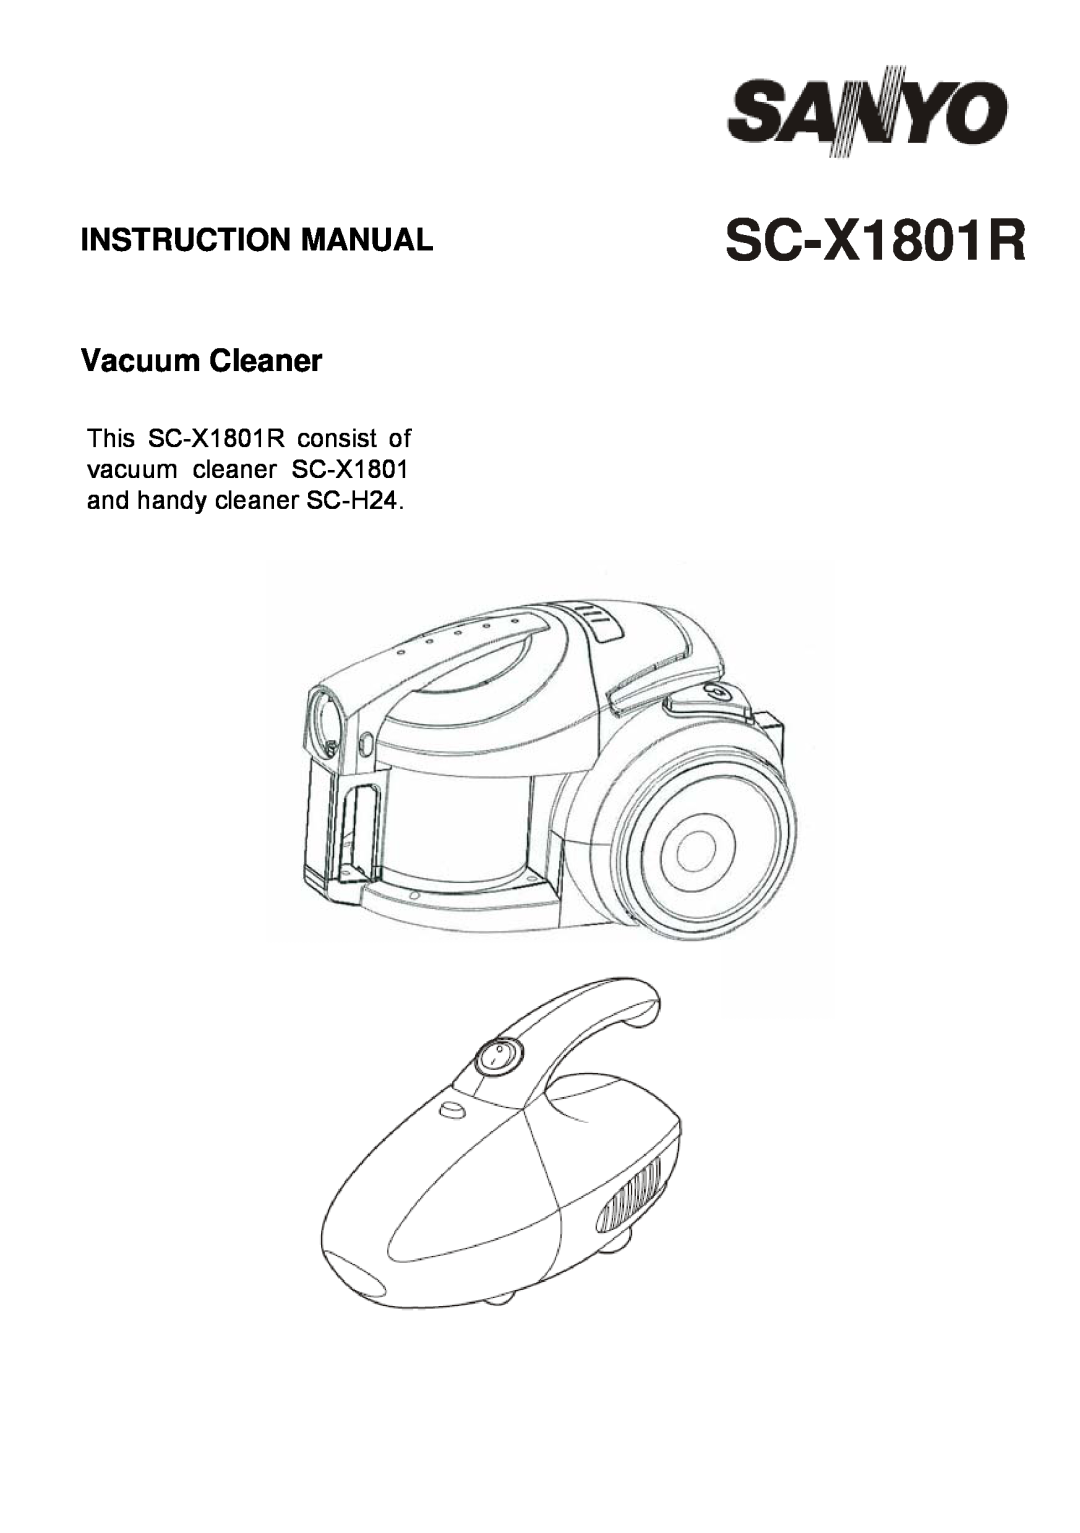 Sanyo SC-X1801R instruction manual 